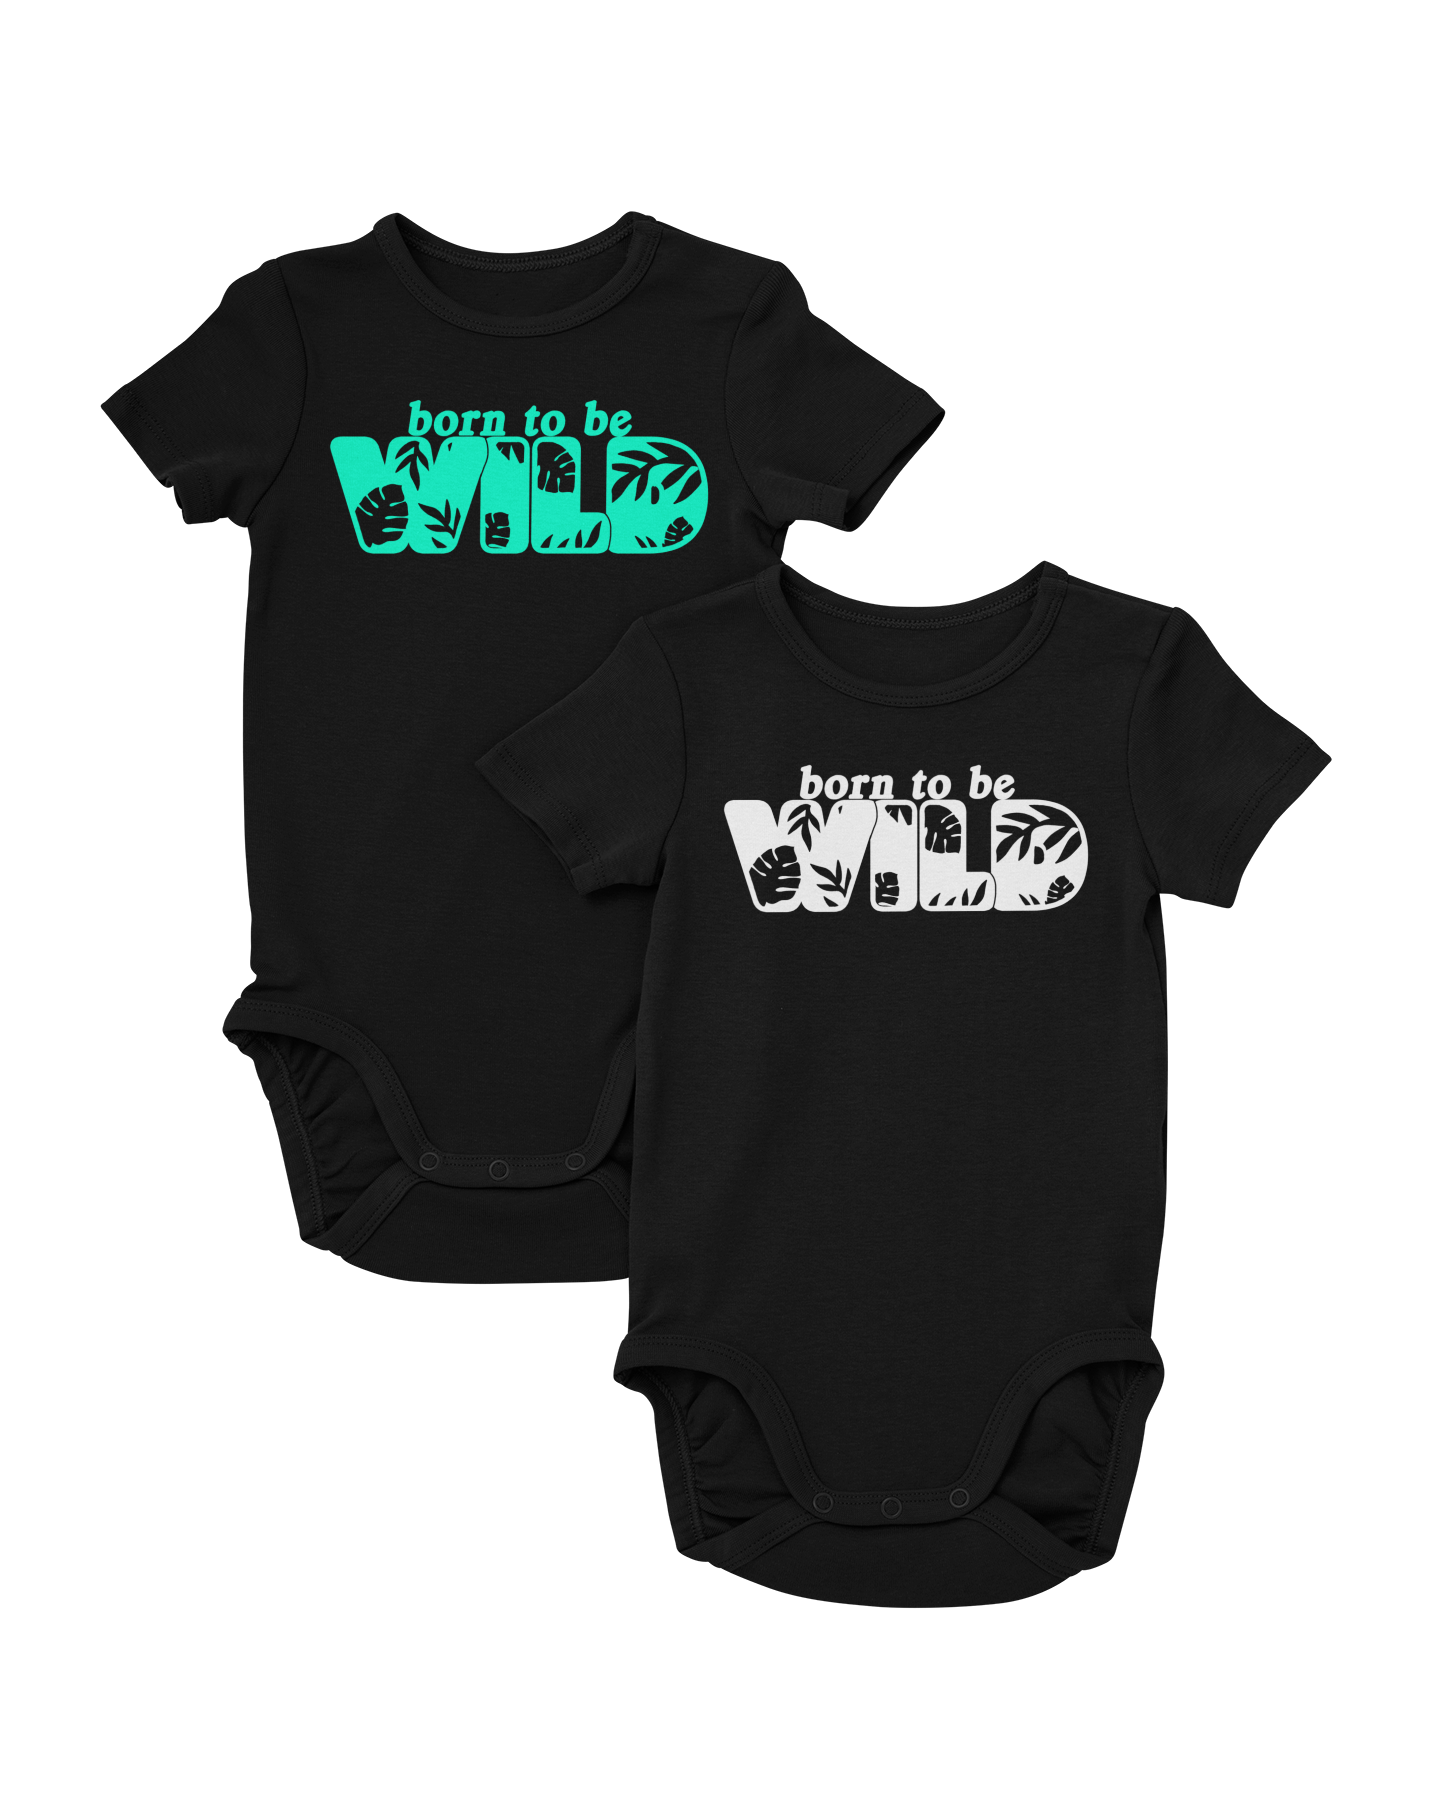 "born to be wild" design